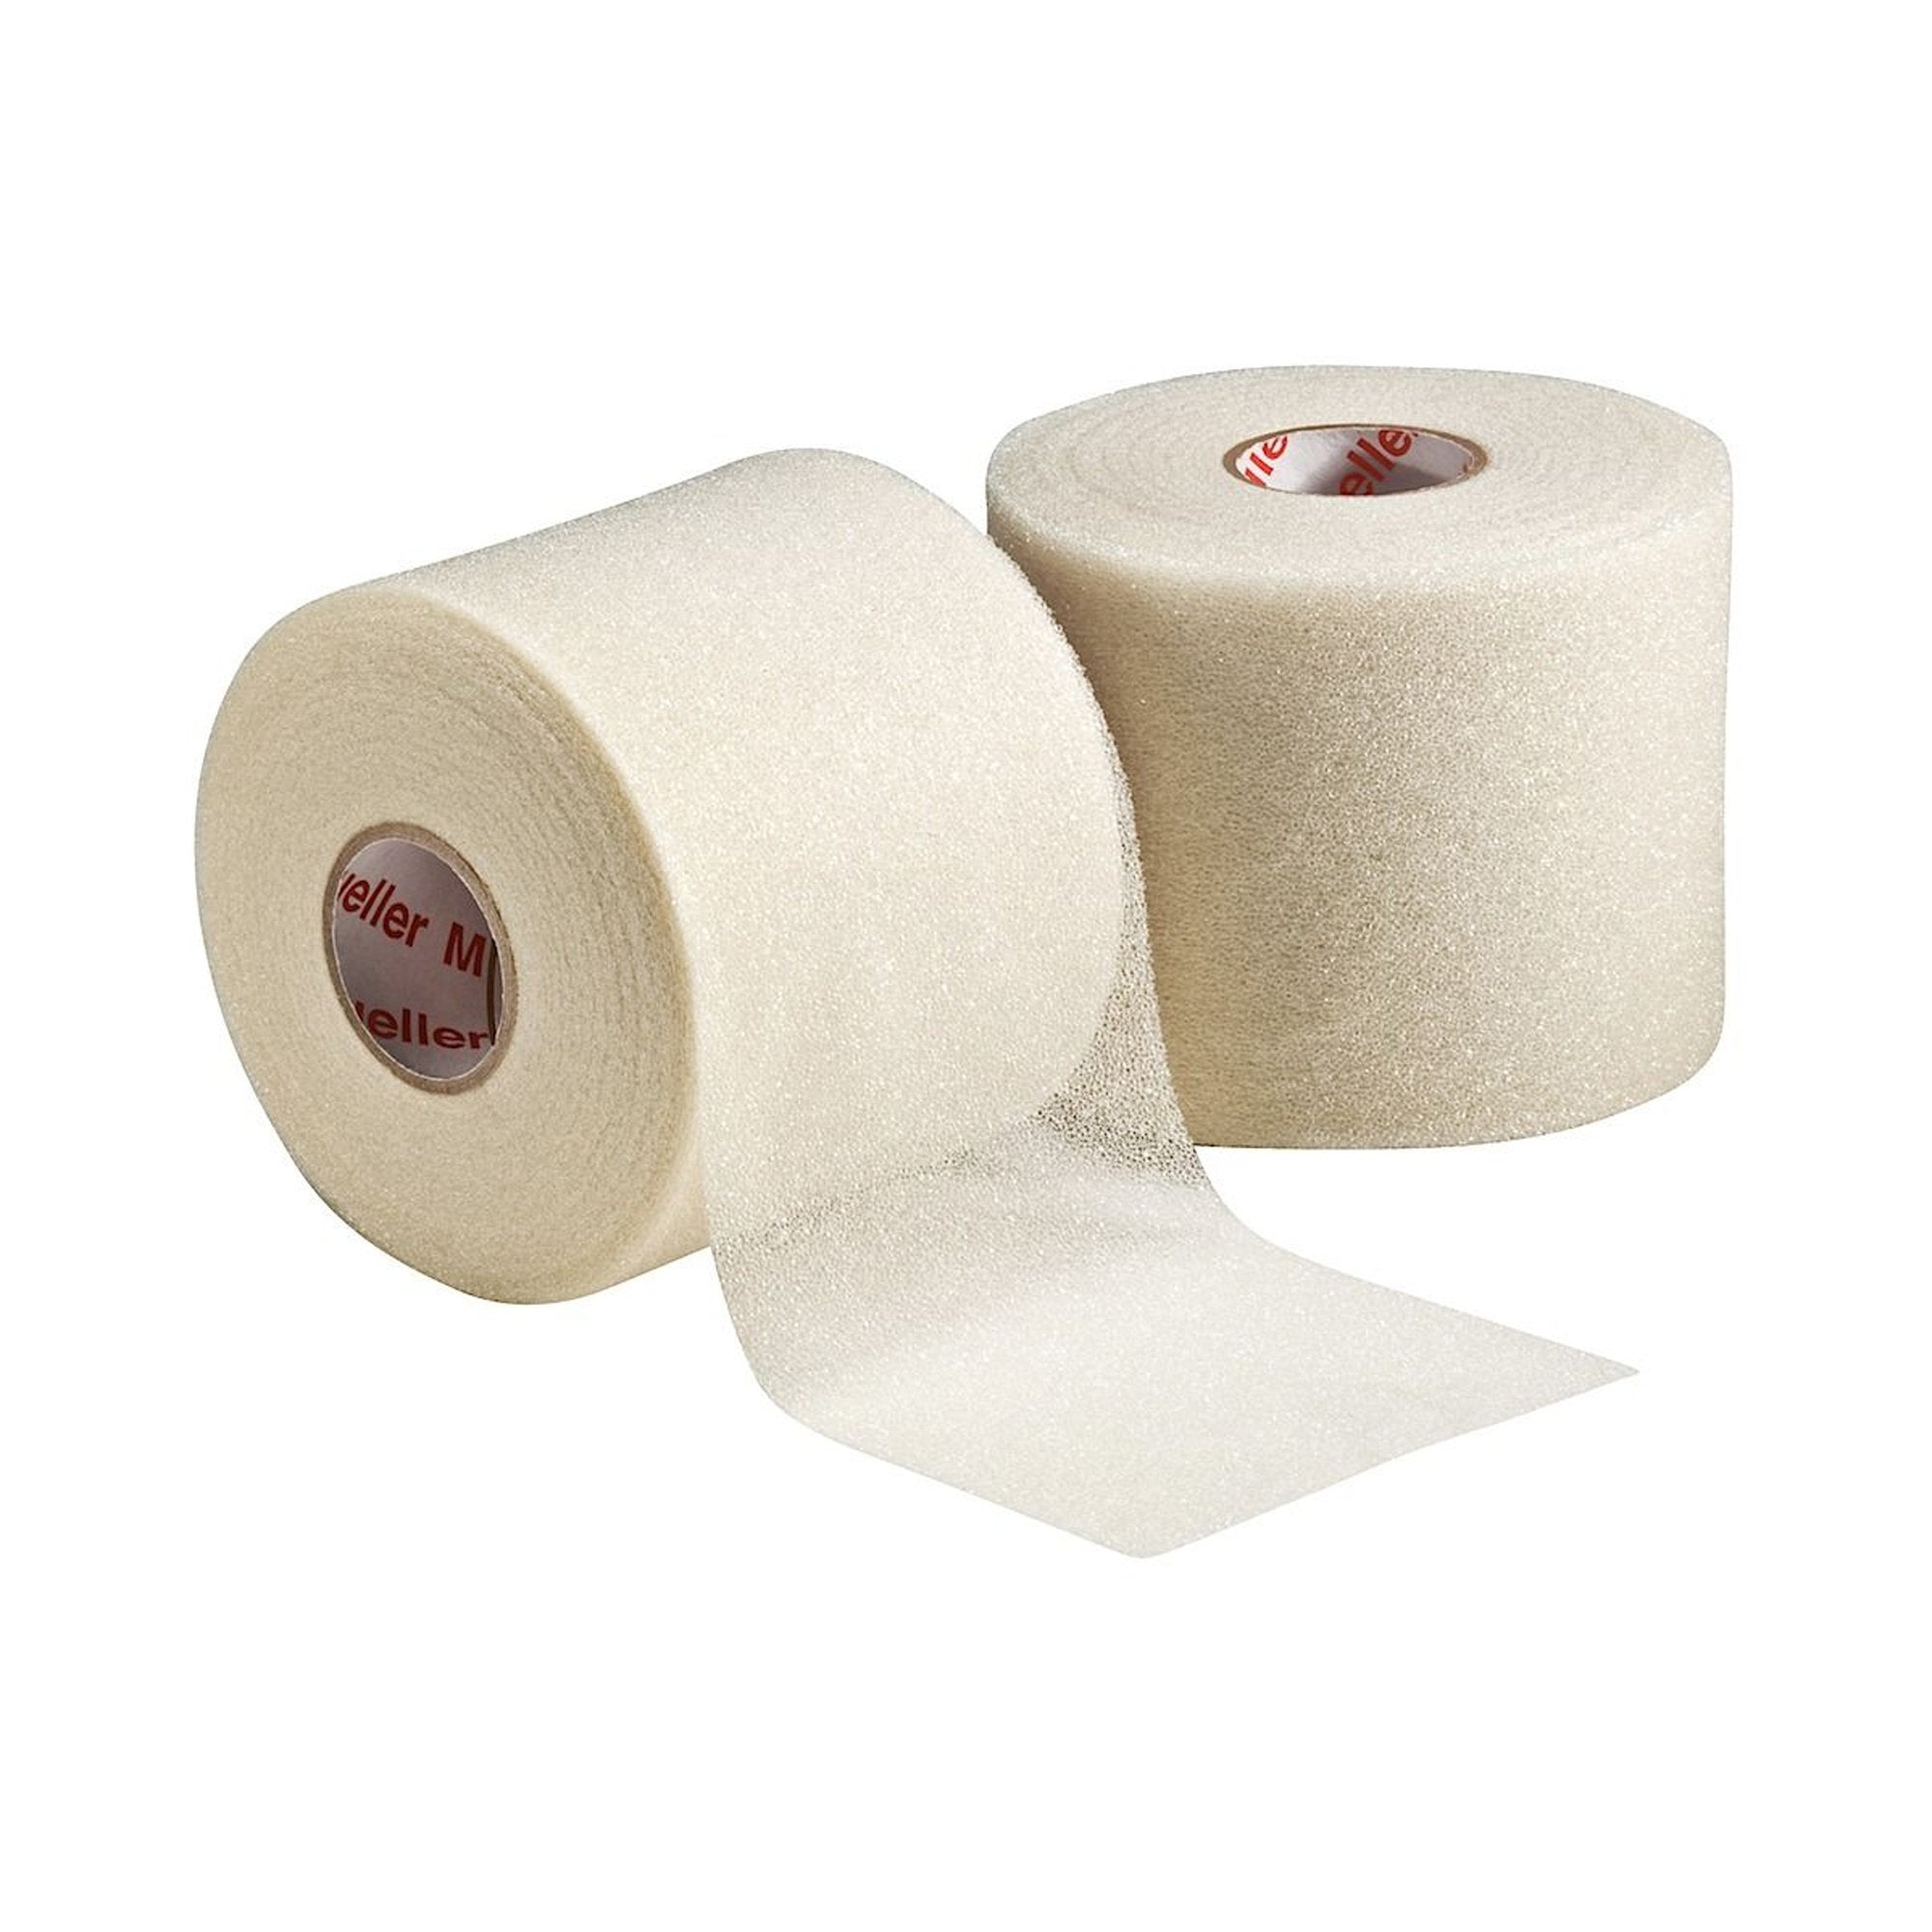 Athletic Underwrap Tape Mueller® MWrap® Natural 2-3/4 Inch X 30 Yard Foam NonSterile